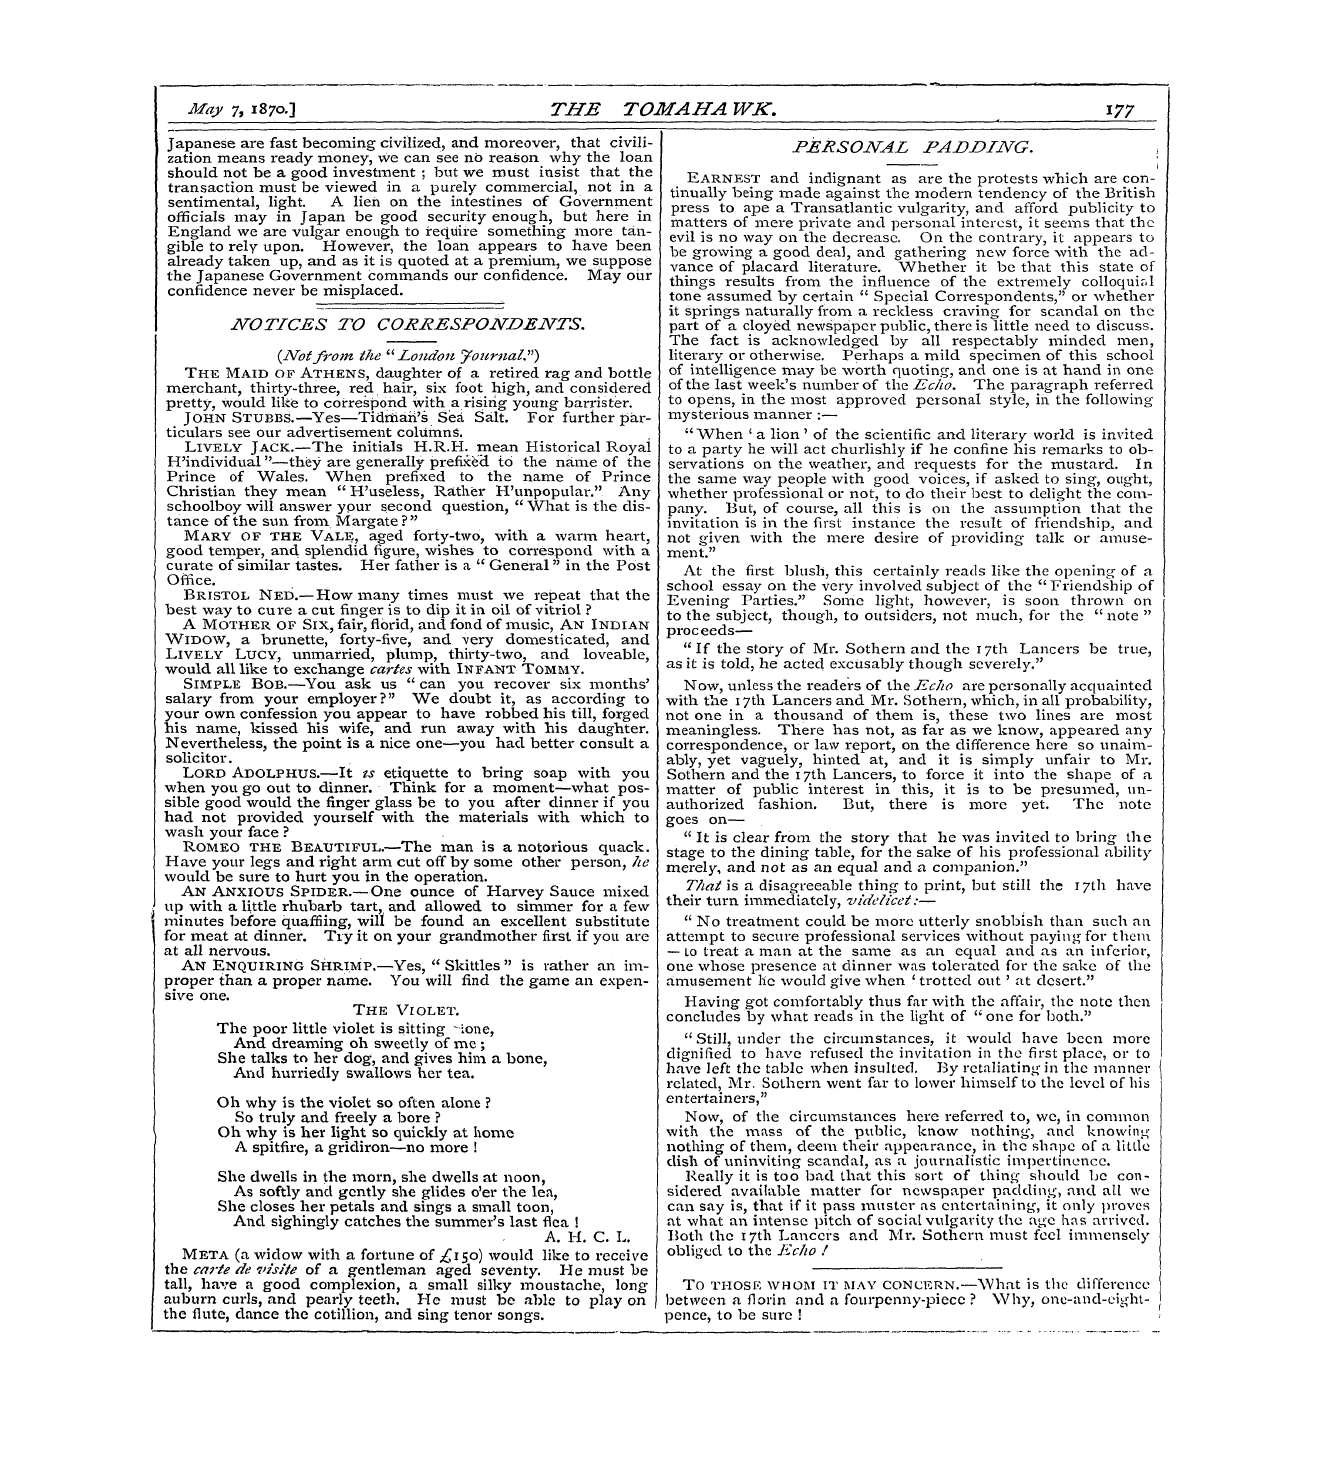 Tomahawk (1867-1870): jS F Y, 1st edition - Personal Padjding. , ¦